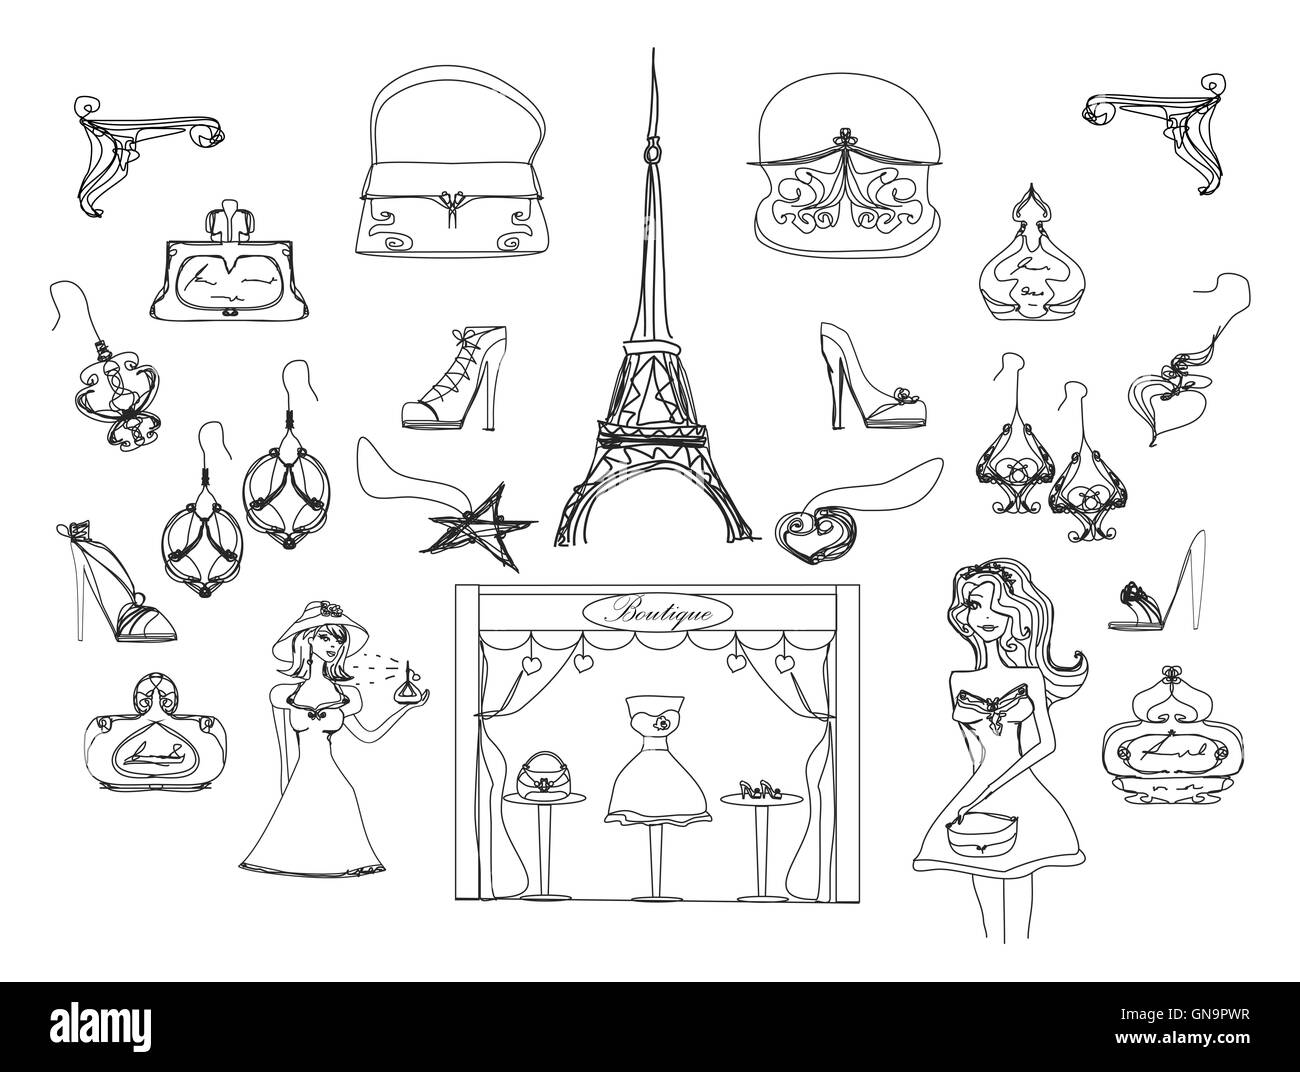 Paris doodles set Stock Photo - Alamy